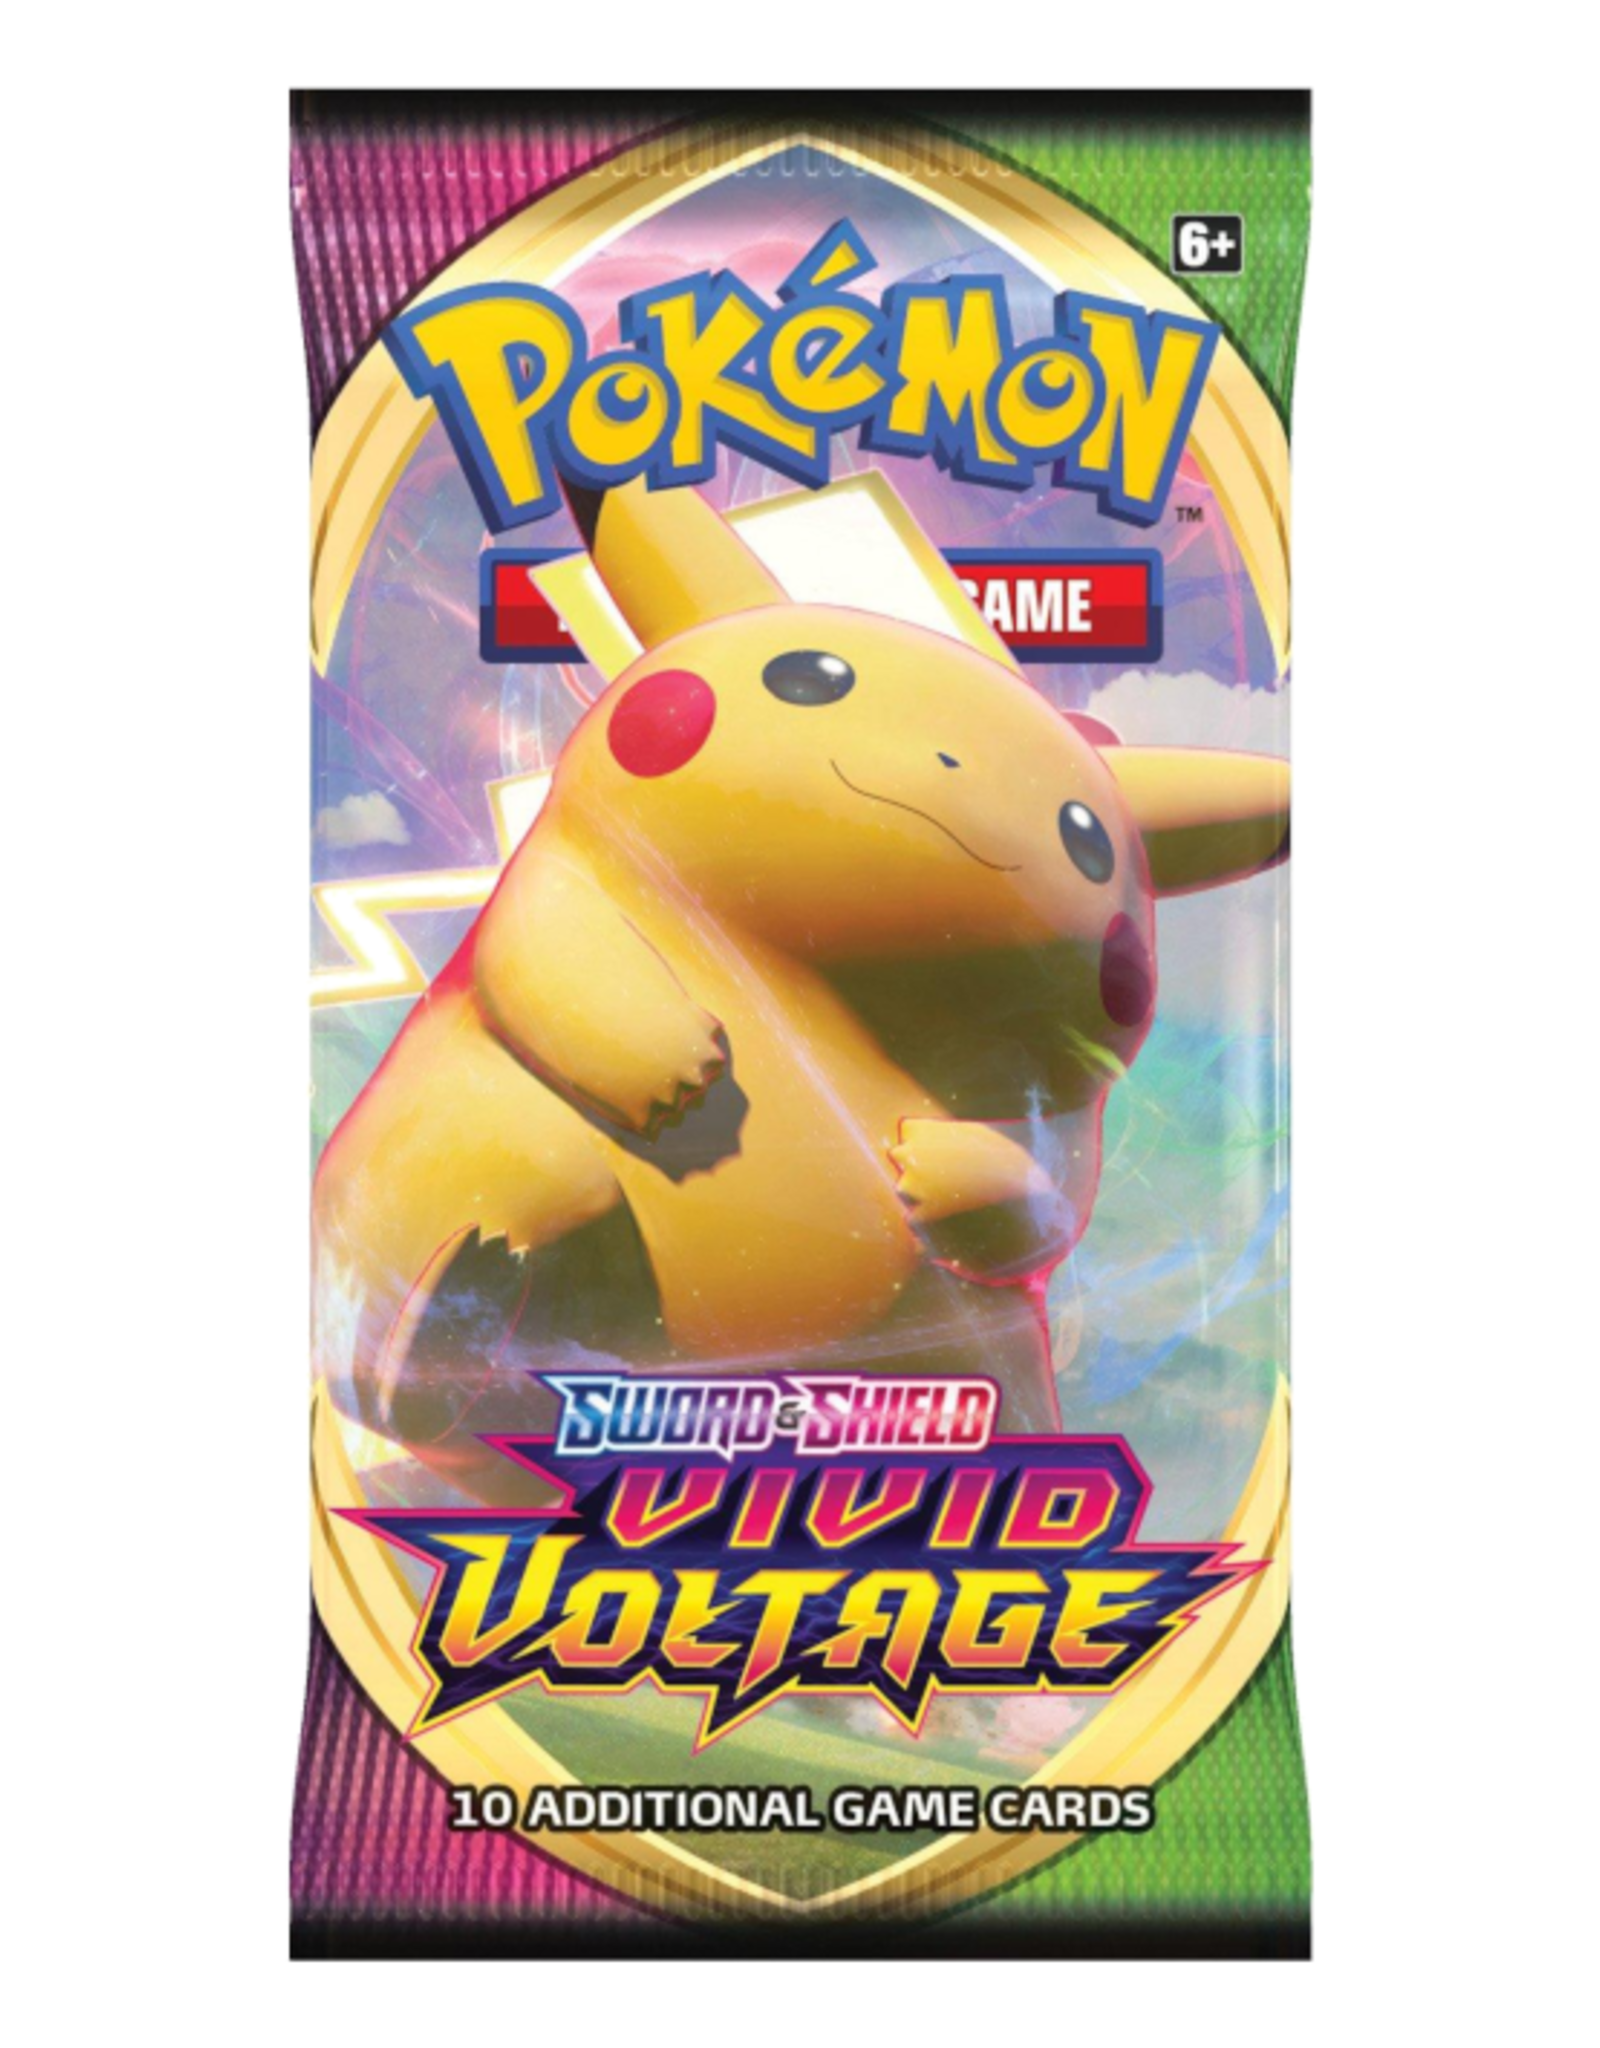 Pokemon TCG Pokemon TCG - Sword & Shield 4: Vivid Voltage Booster Pack